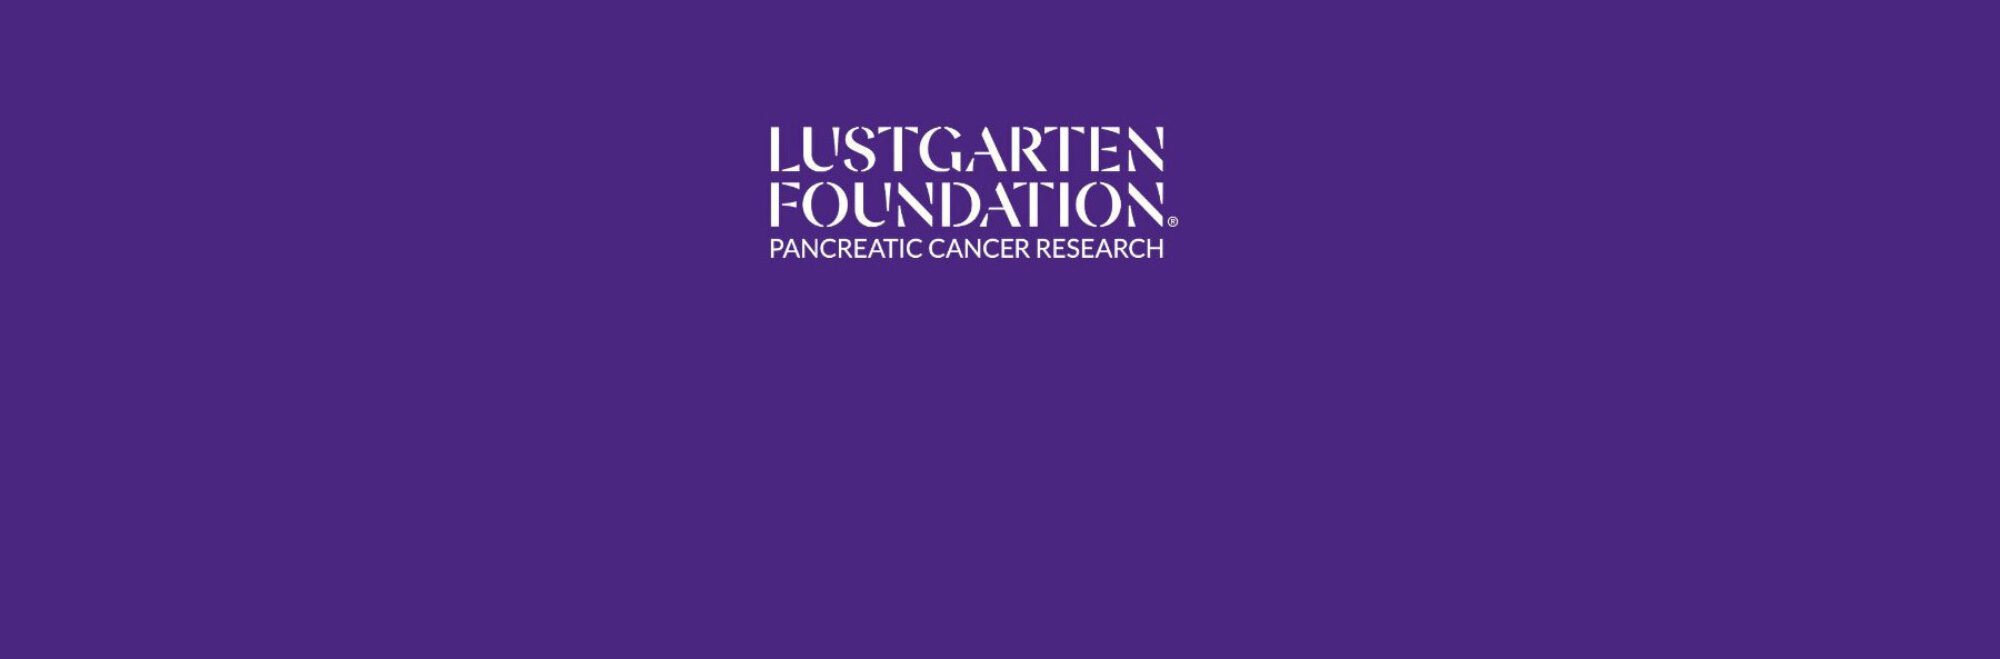 Lustgarden foundation hero